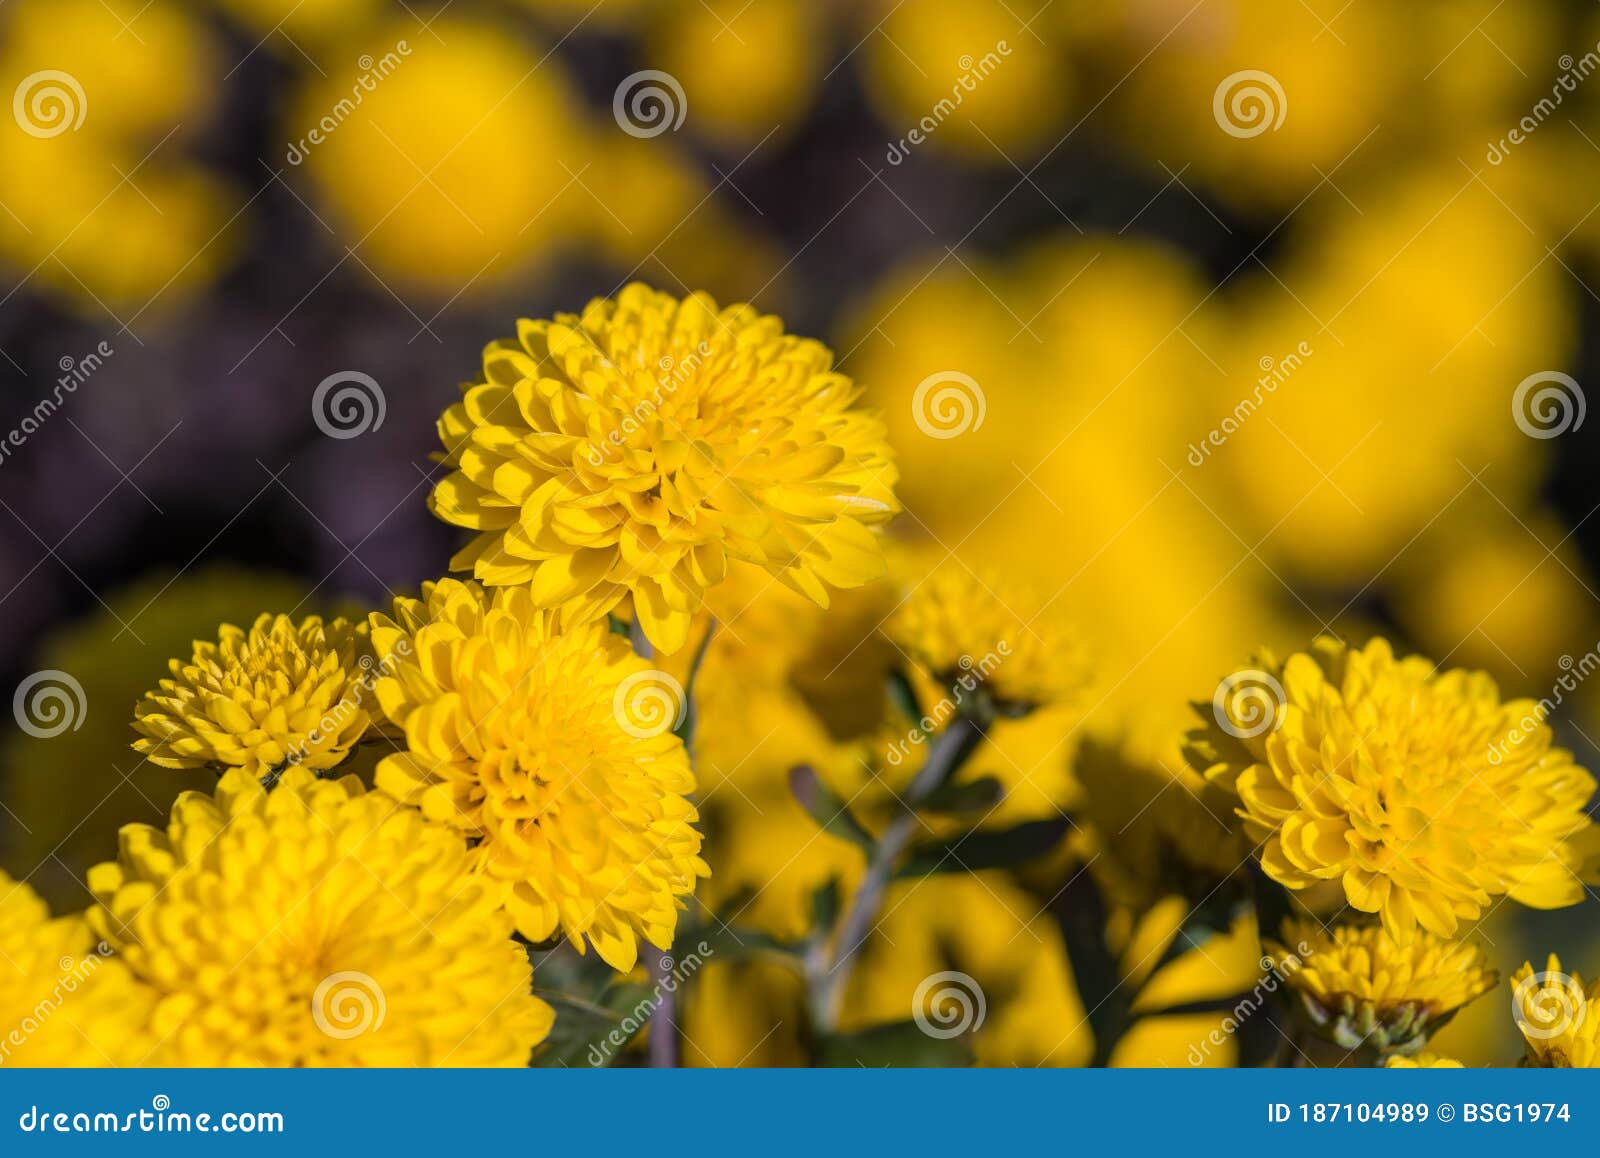 Closeup Yellow Chrysanthemum Flowers Chrysanthemum Morifolium In The Garden Autumn Flowers Kyiv Kiev Ukraine Europe Stock Image Image Of Botanical Bright 187104989